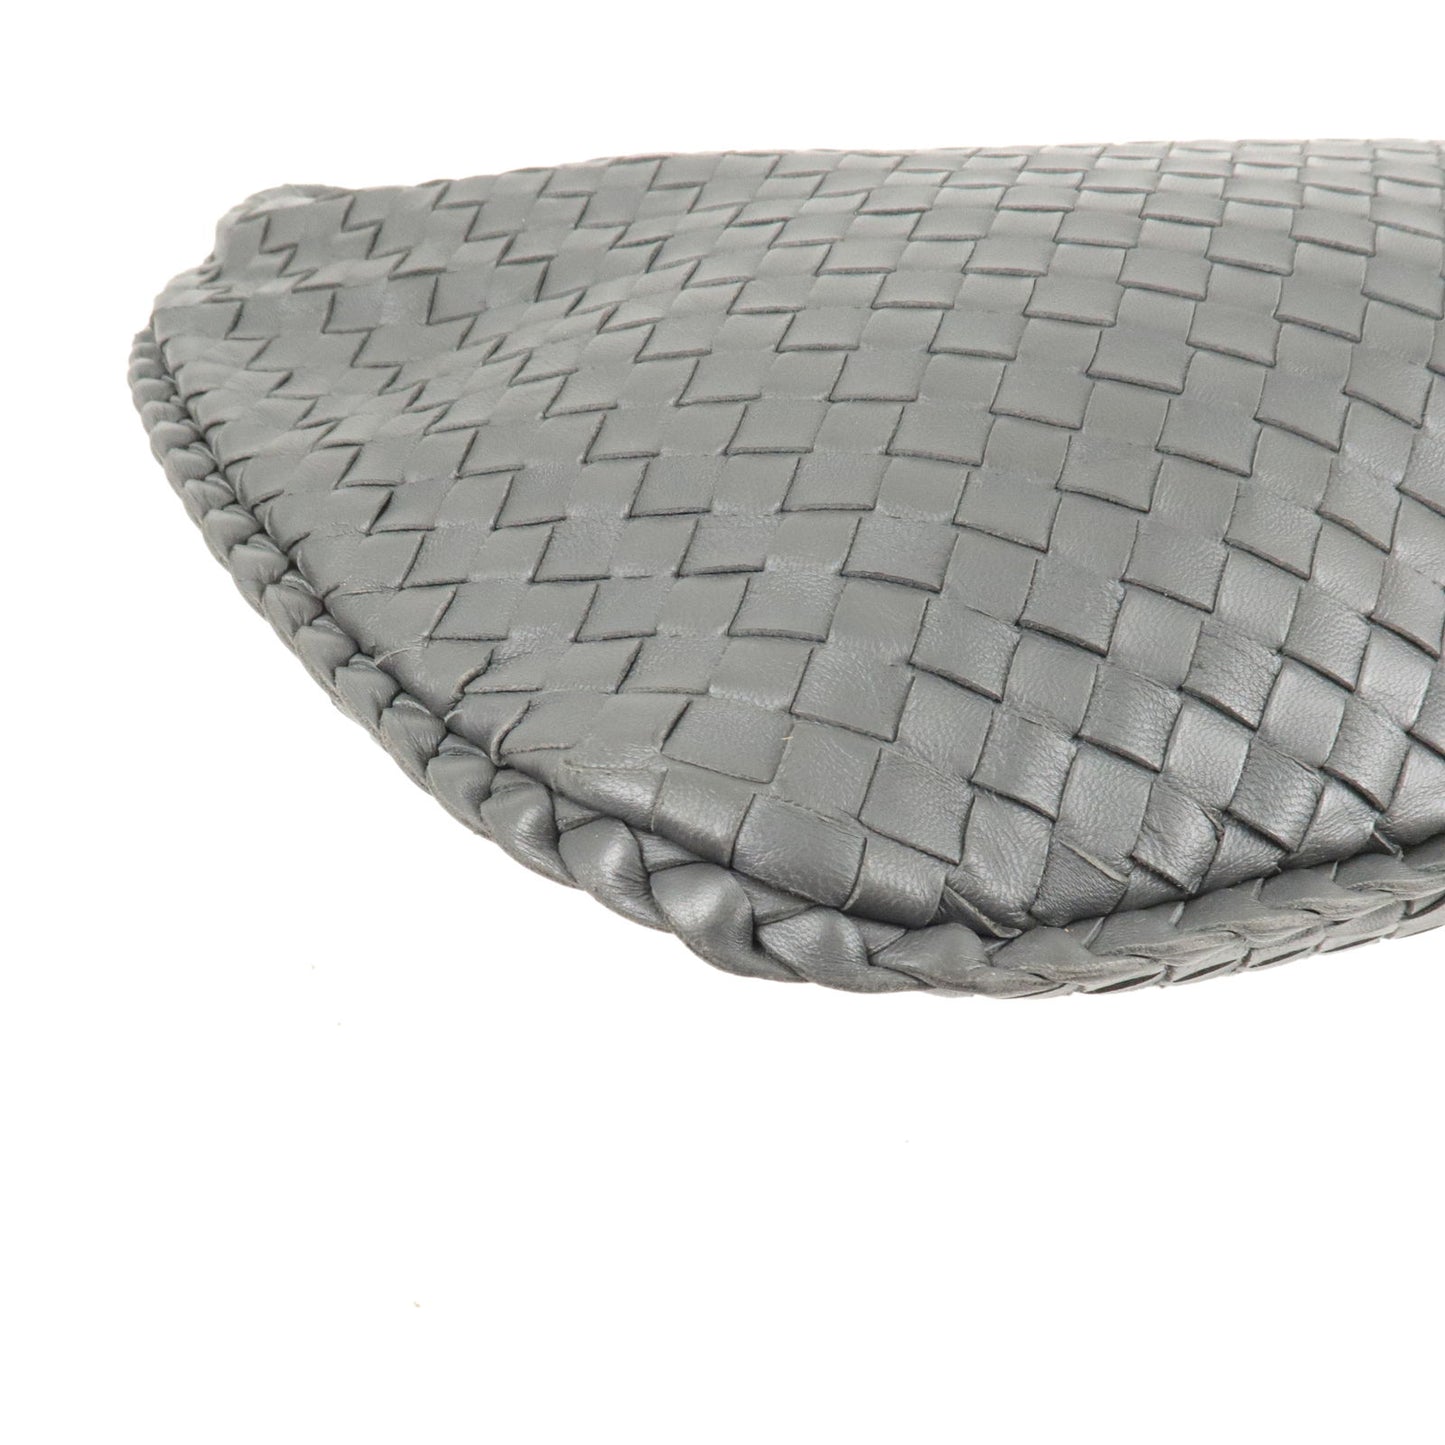 BOTTEGA VENETA Intrecciato Leather Shoulder Bag Gray 115653